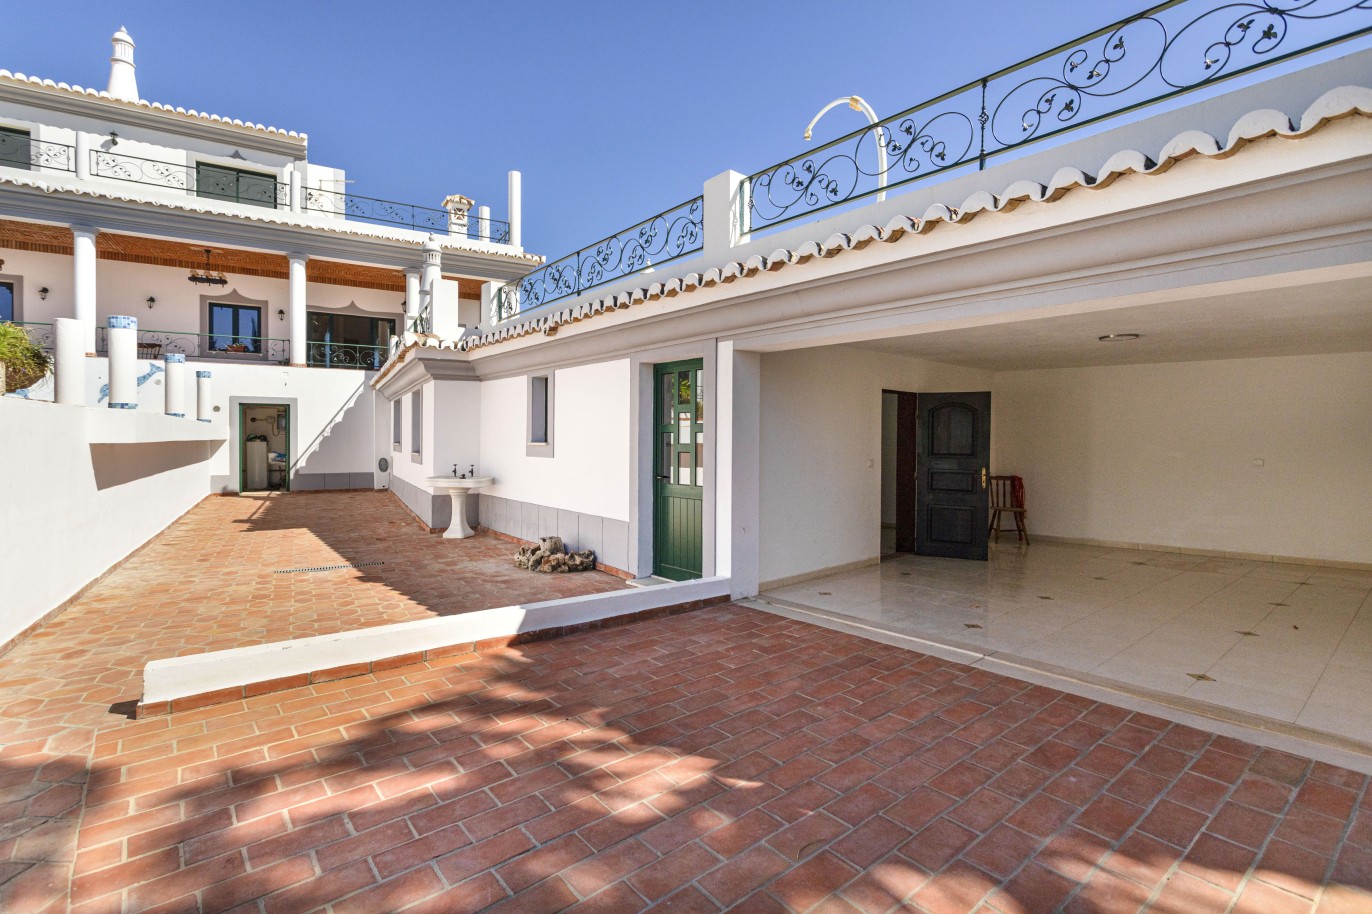 Villa zum Verkauf mit pool, Meer-und Bergblick, Loulé, Algarve, Portugal_236416